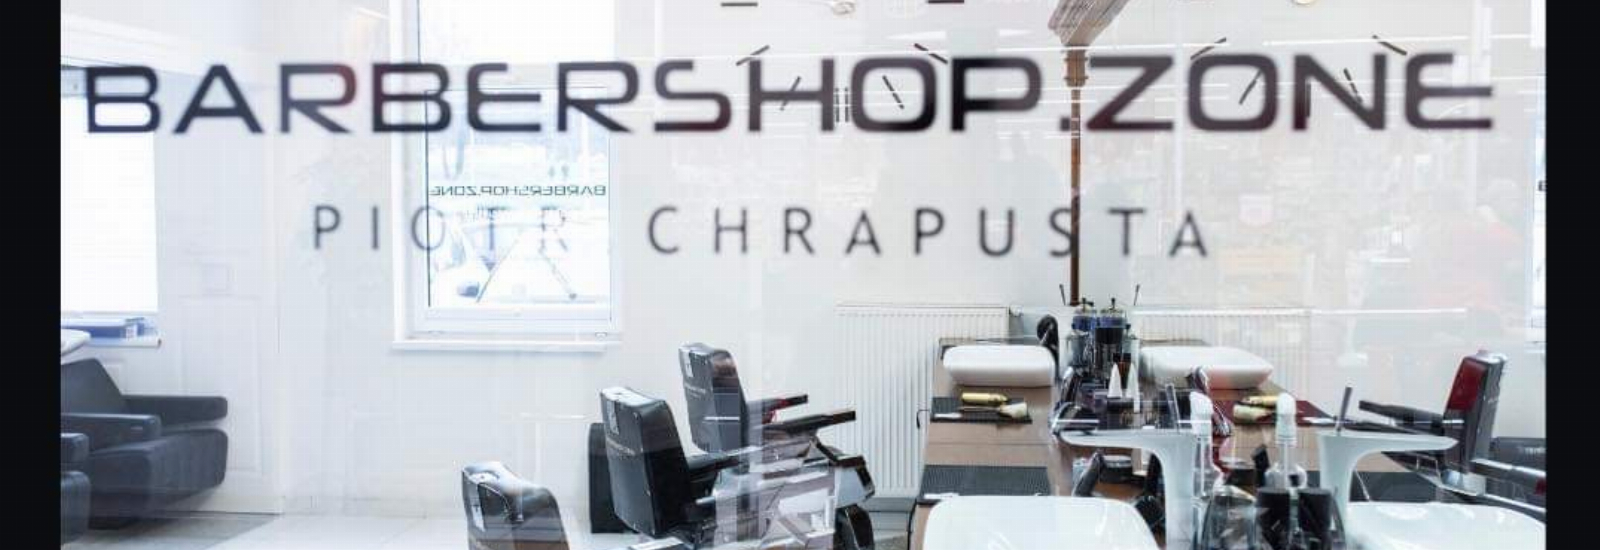 Barbershop.zone Piotr Chrapusta